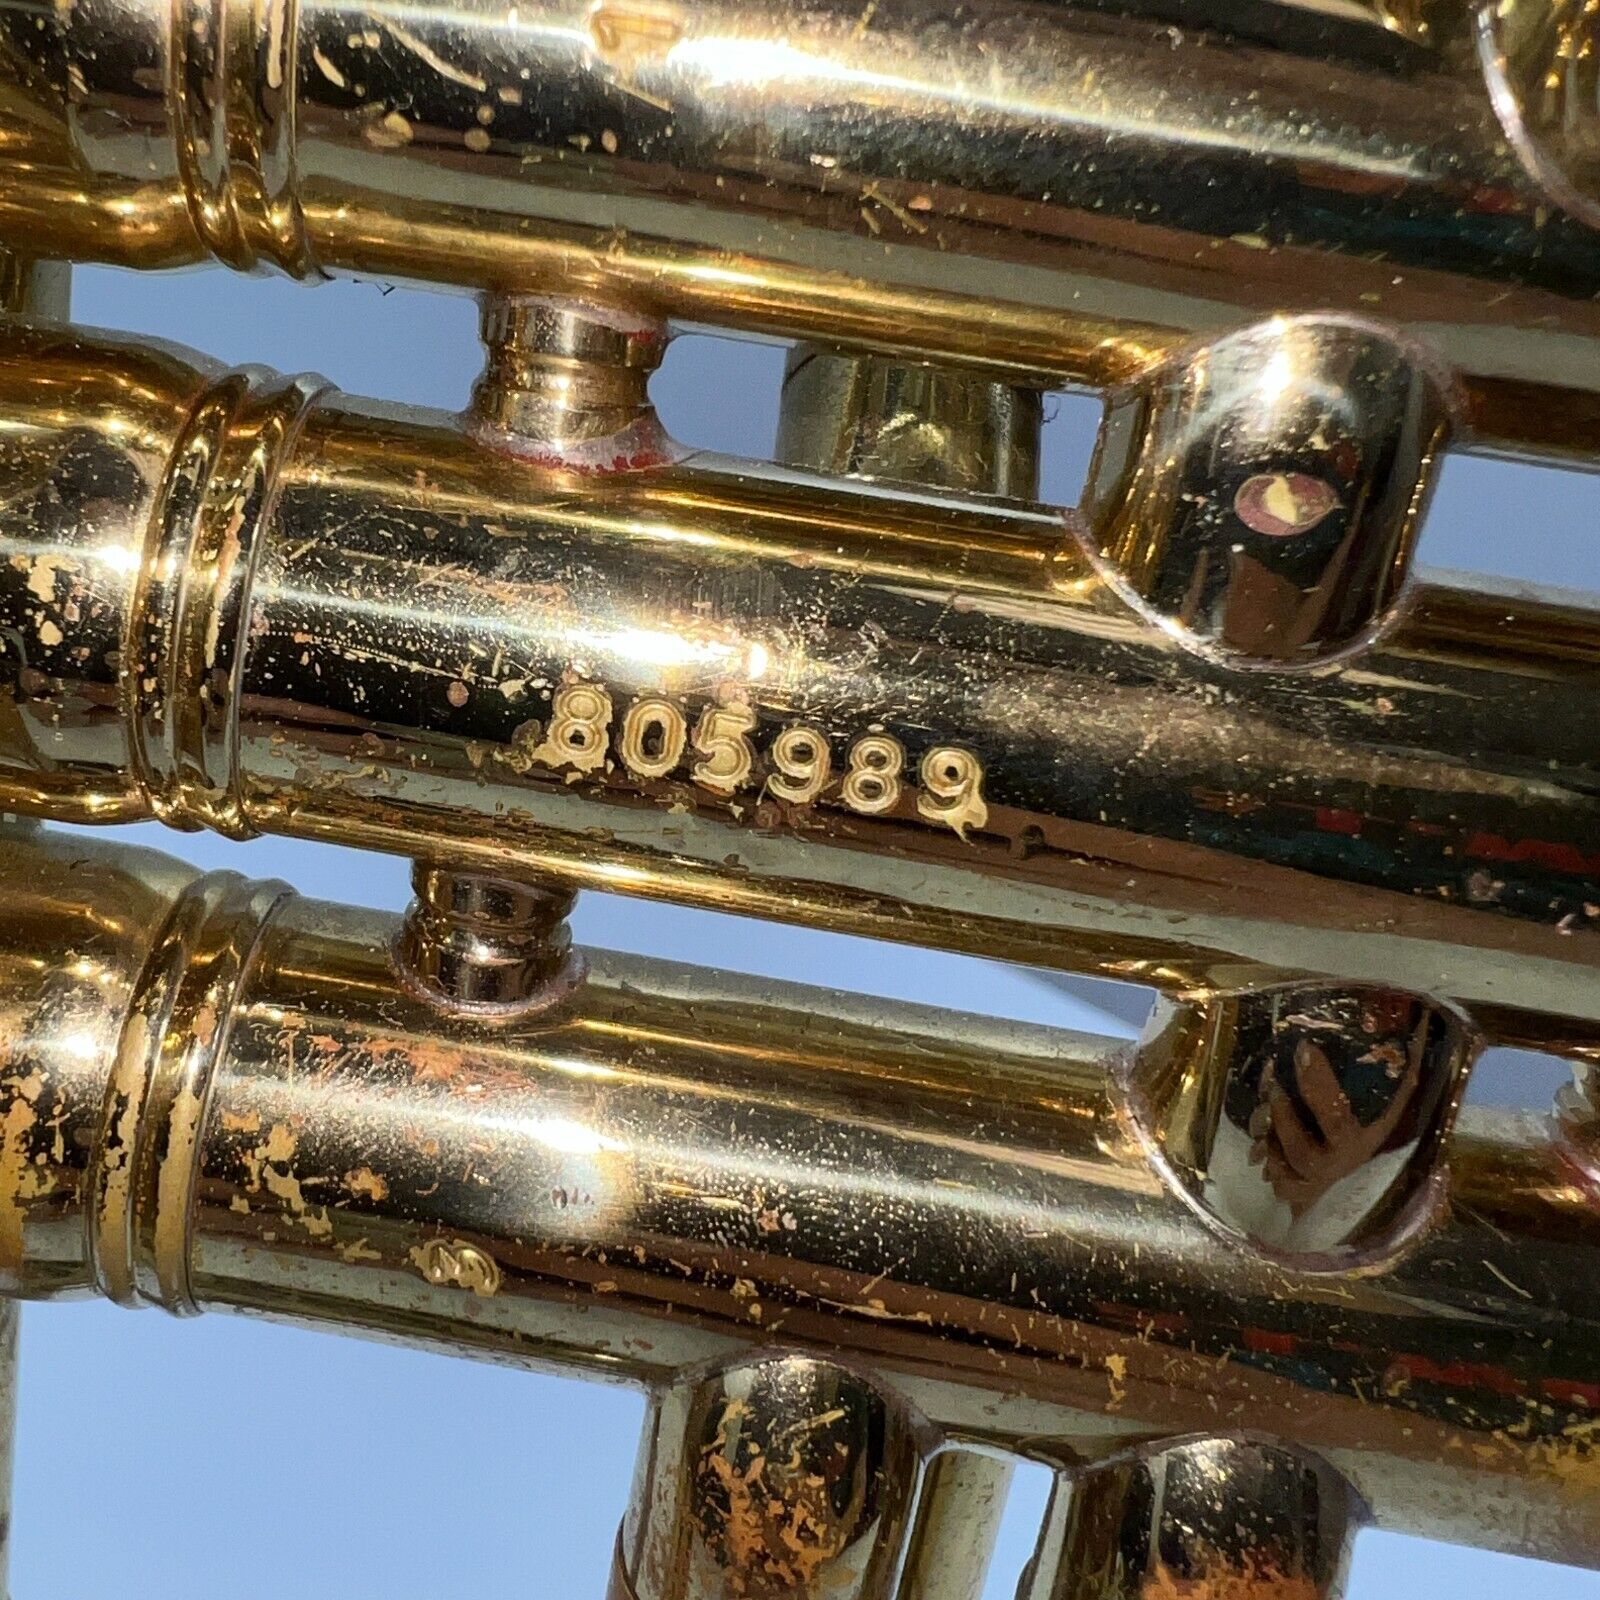 King 1501 U.S.A. Trumpet in Case for Restoration 9